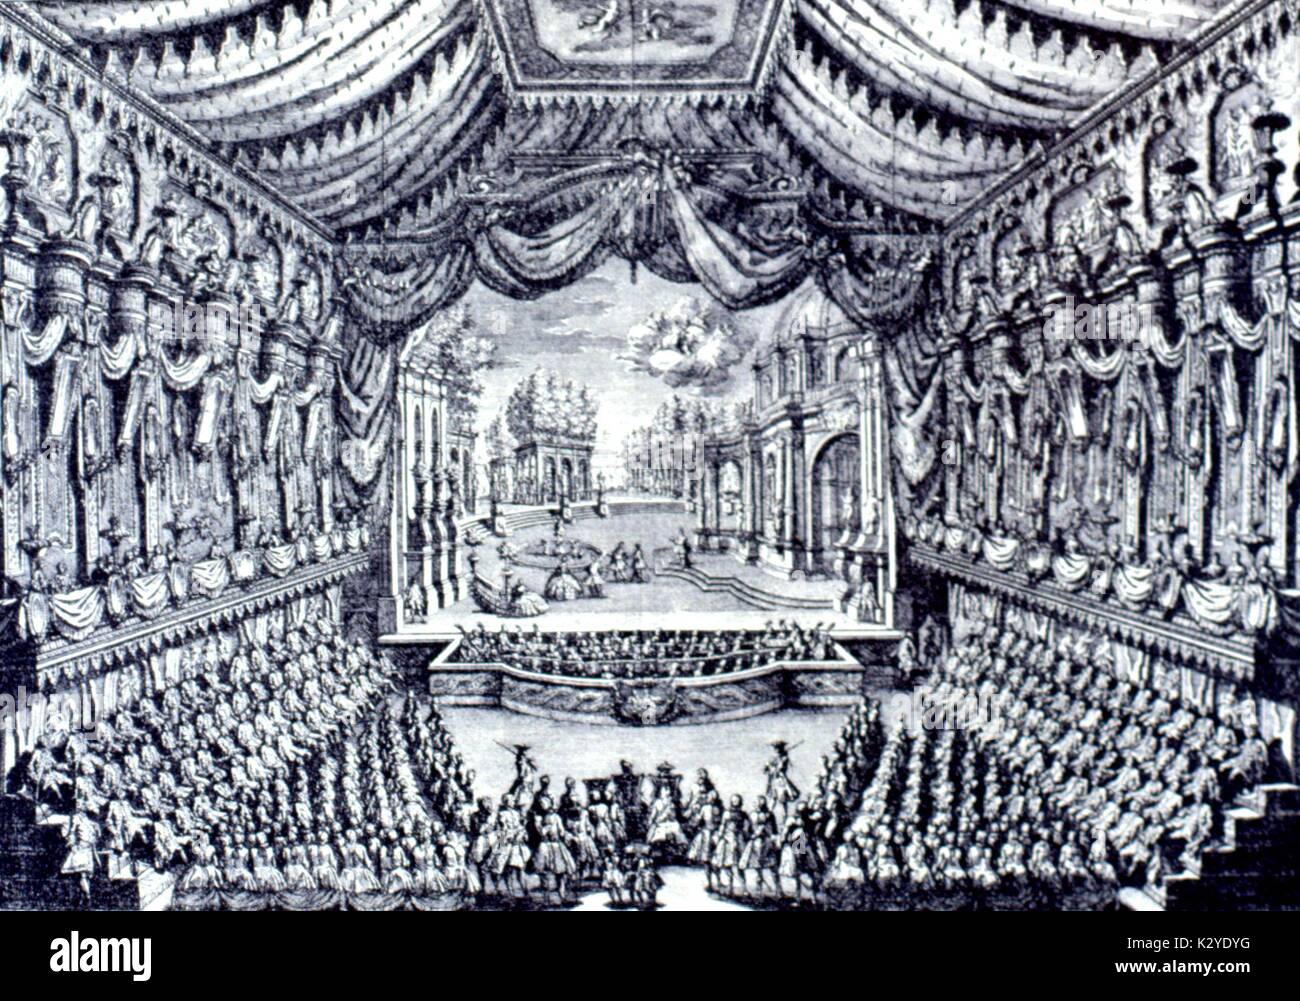 Giuseppe Maio / di Majo , composer of ' Sogno d'Olympia / Olimpia,' Naples, 1749 Text by Calzabigi / Calsabigi (1714-1795) Performance; 18th century audience at the Opera.  Italian opera composer, 1697-1771. Stock Photo